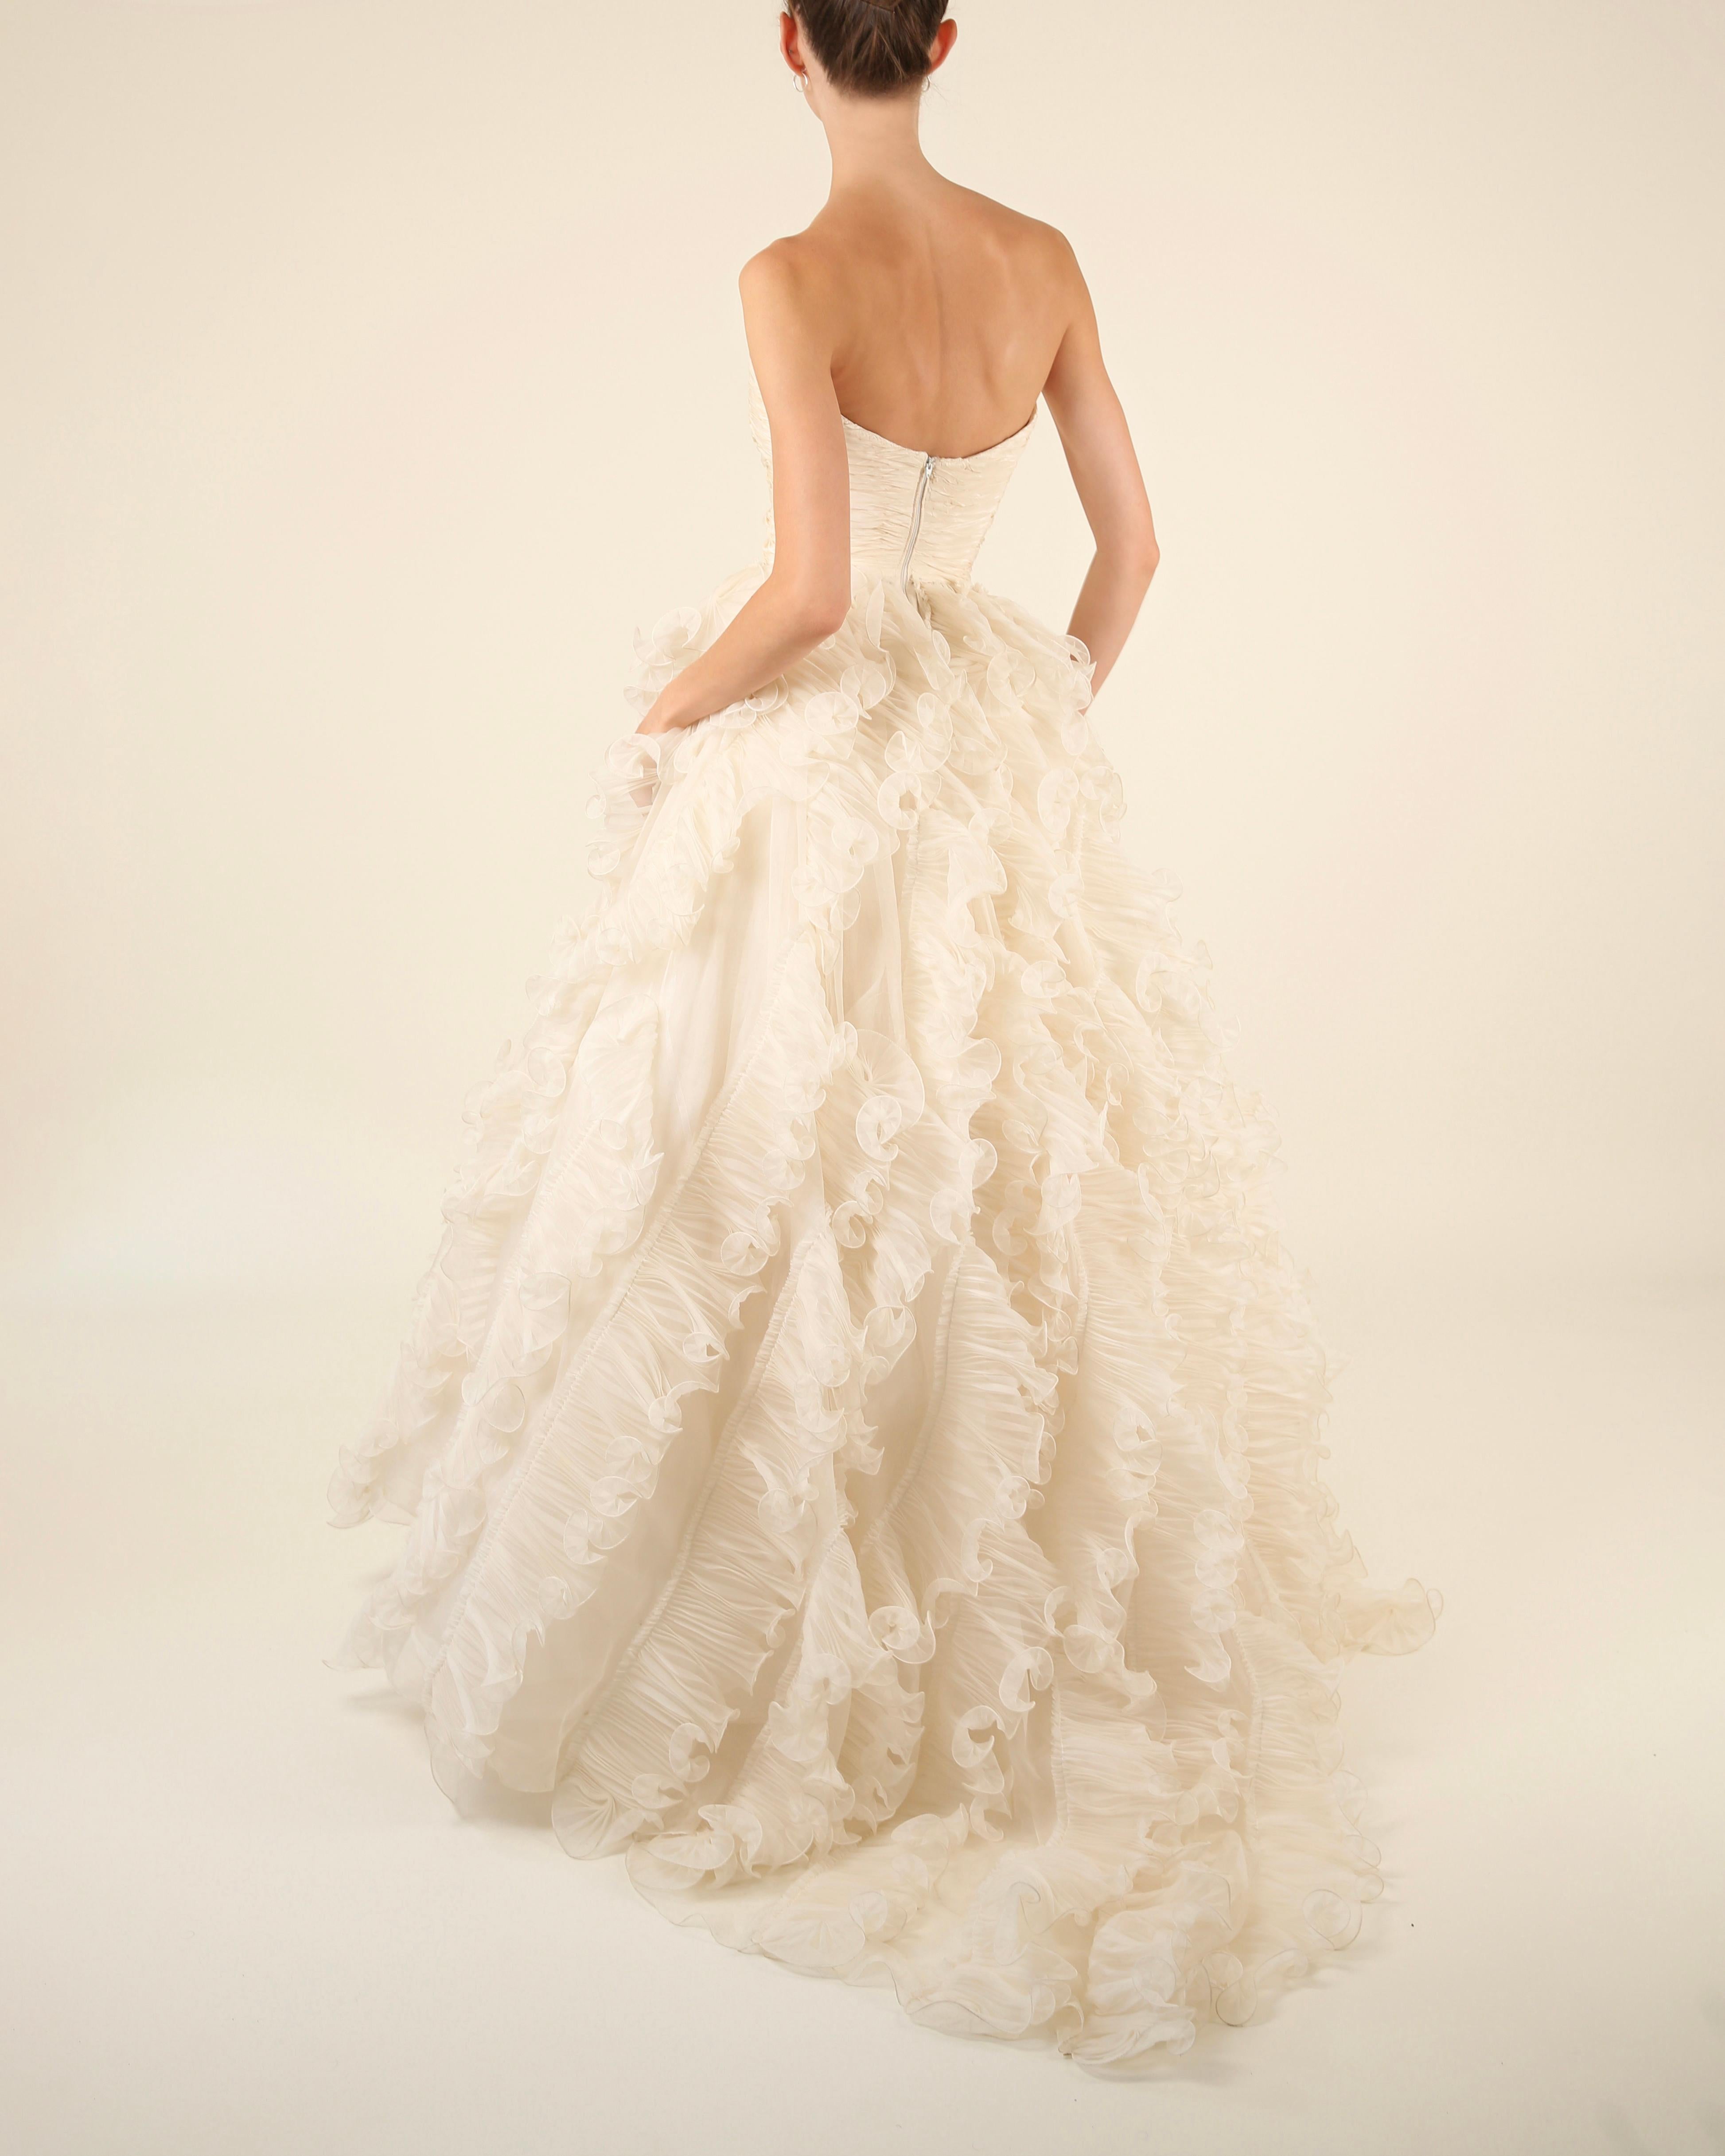 Oscar de la Renta S/S08 bridal ivory strapless vintage ruffle wedding dress gown For Sale 3